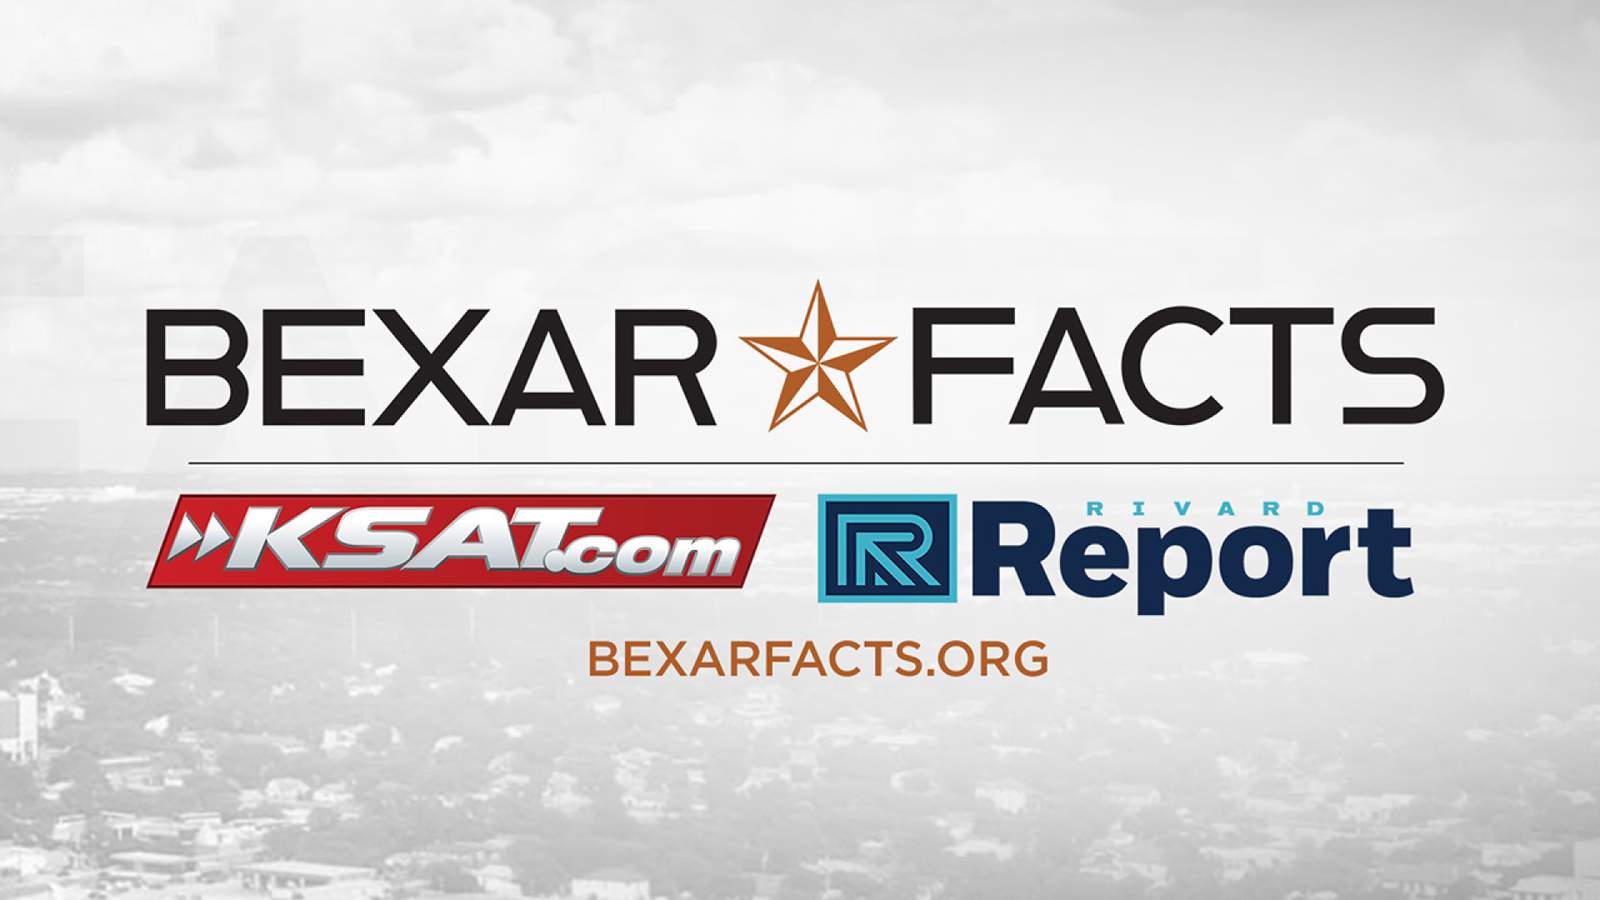 Crime tops list of concerns in Bexar Facts-KSAT-Rivard Report Poll